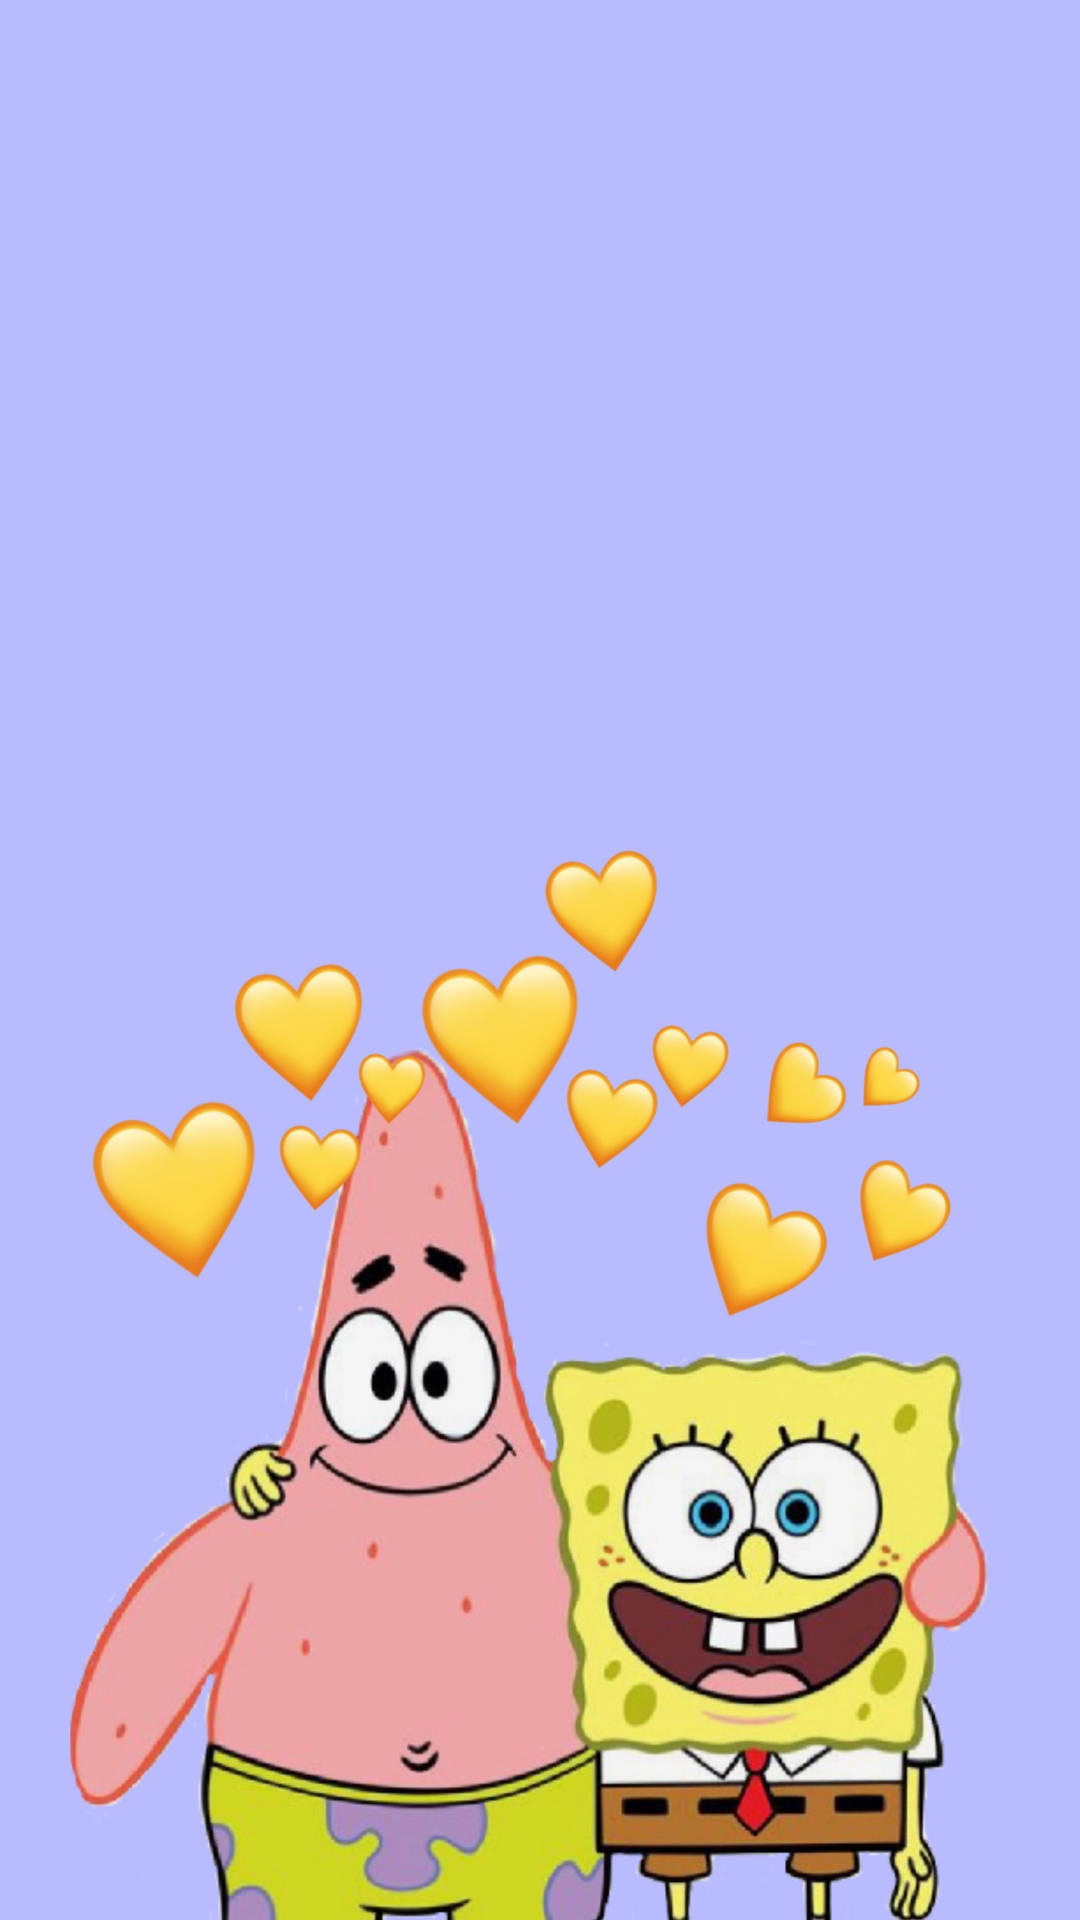 Cool Spongebob With Patrick Poster